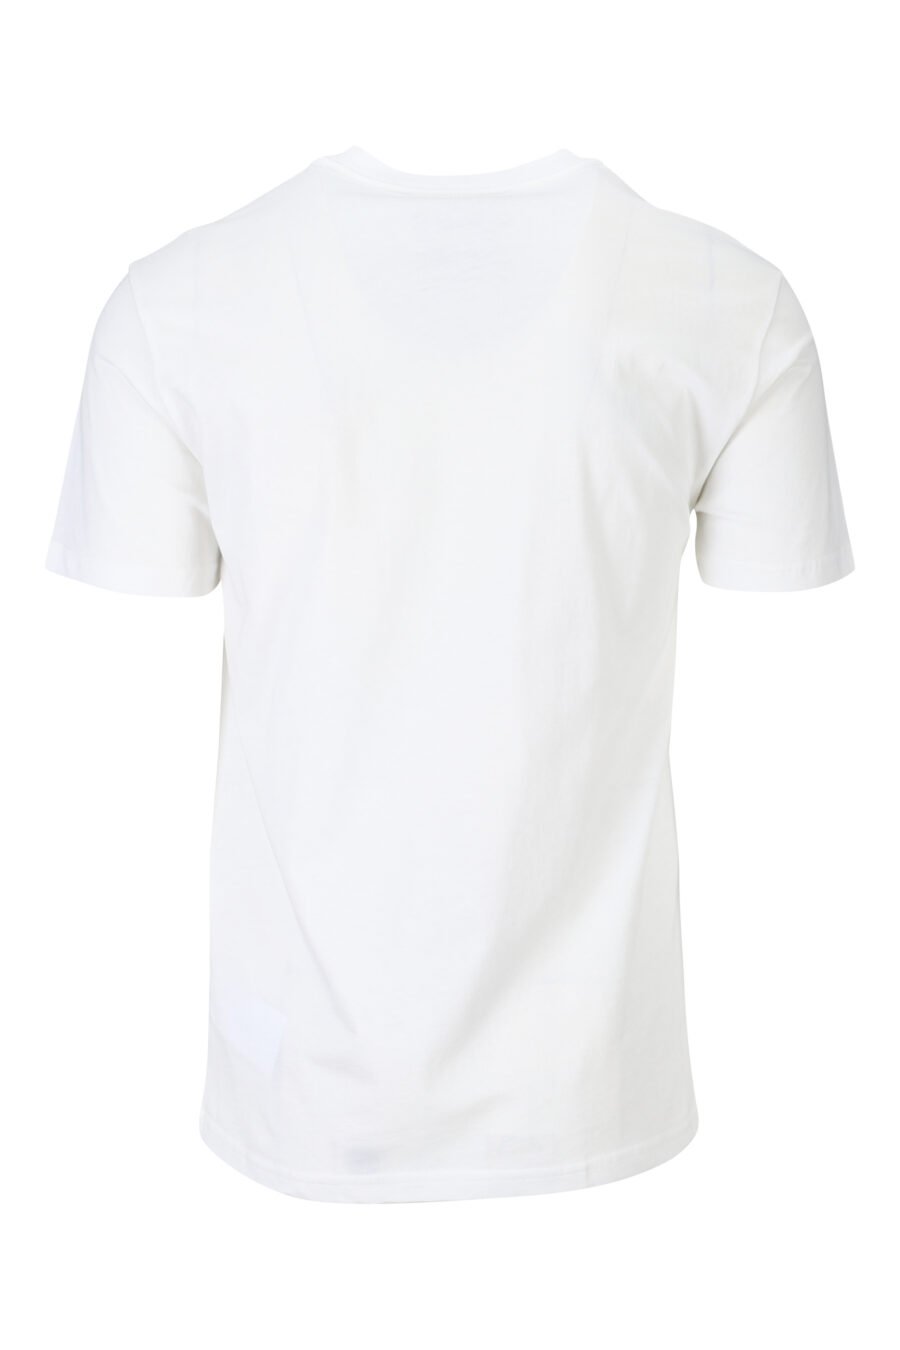 T-shirt éco blanc avec logo bear mini - 889316725384 1